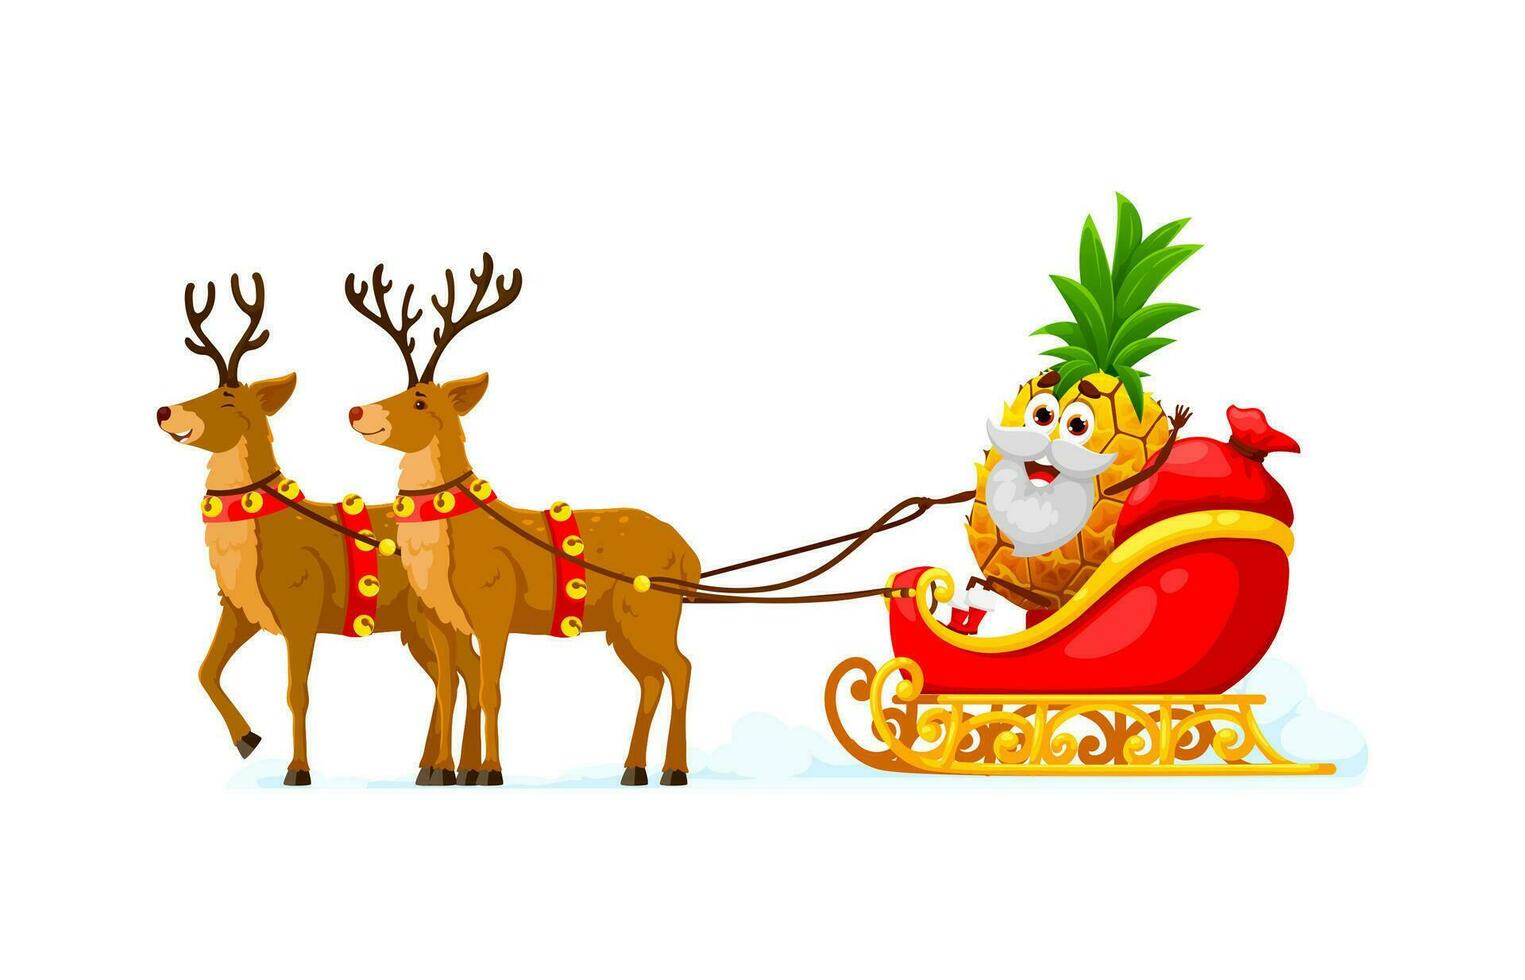 Christmas holiday pineapple fruit Santa character vector